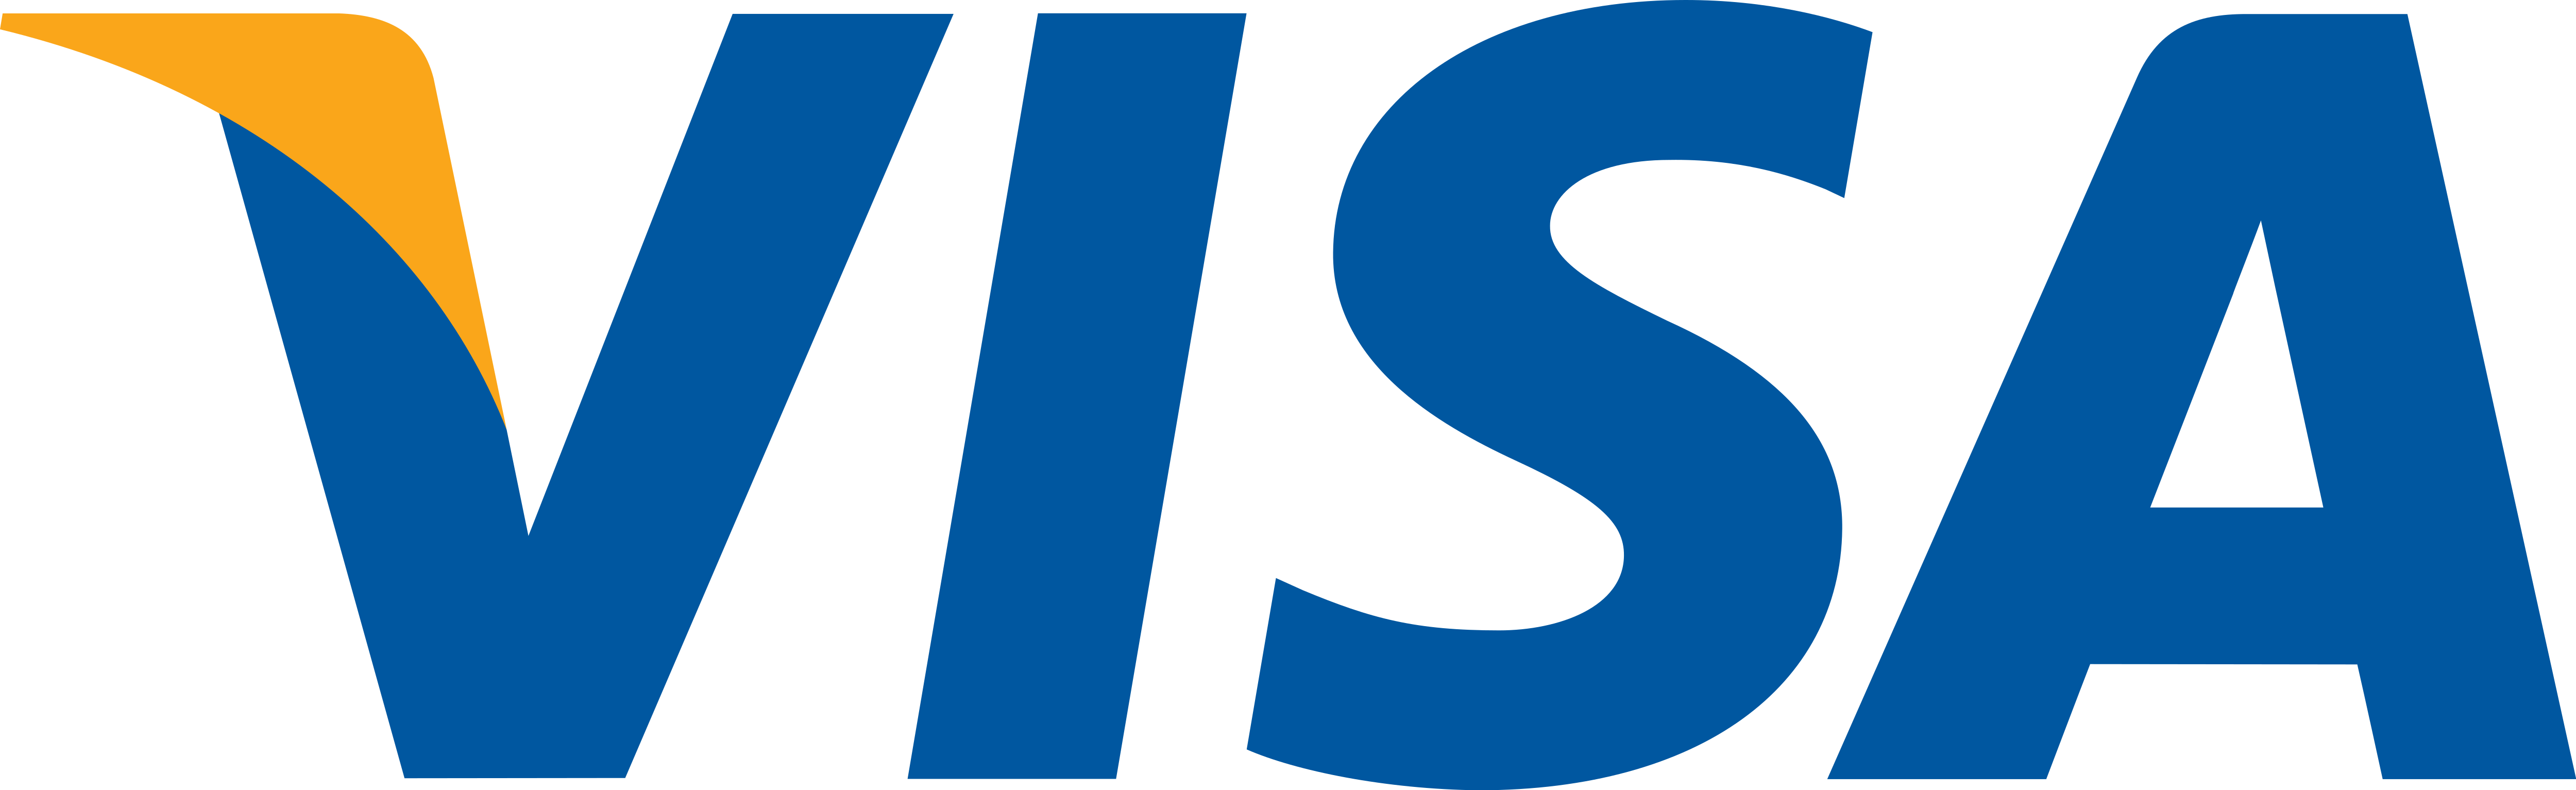 visa-logo-png-2020